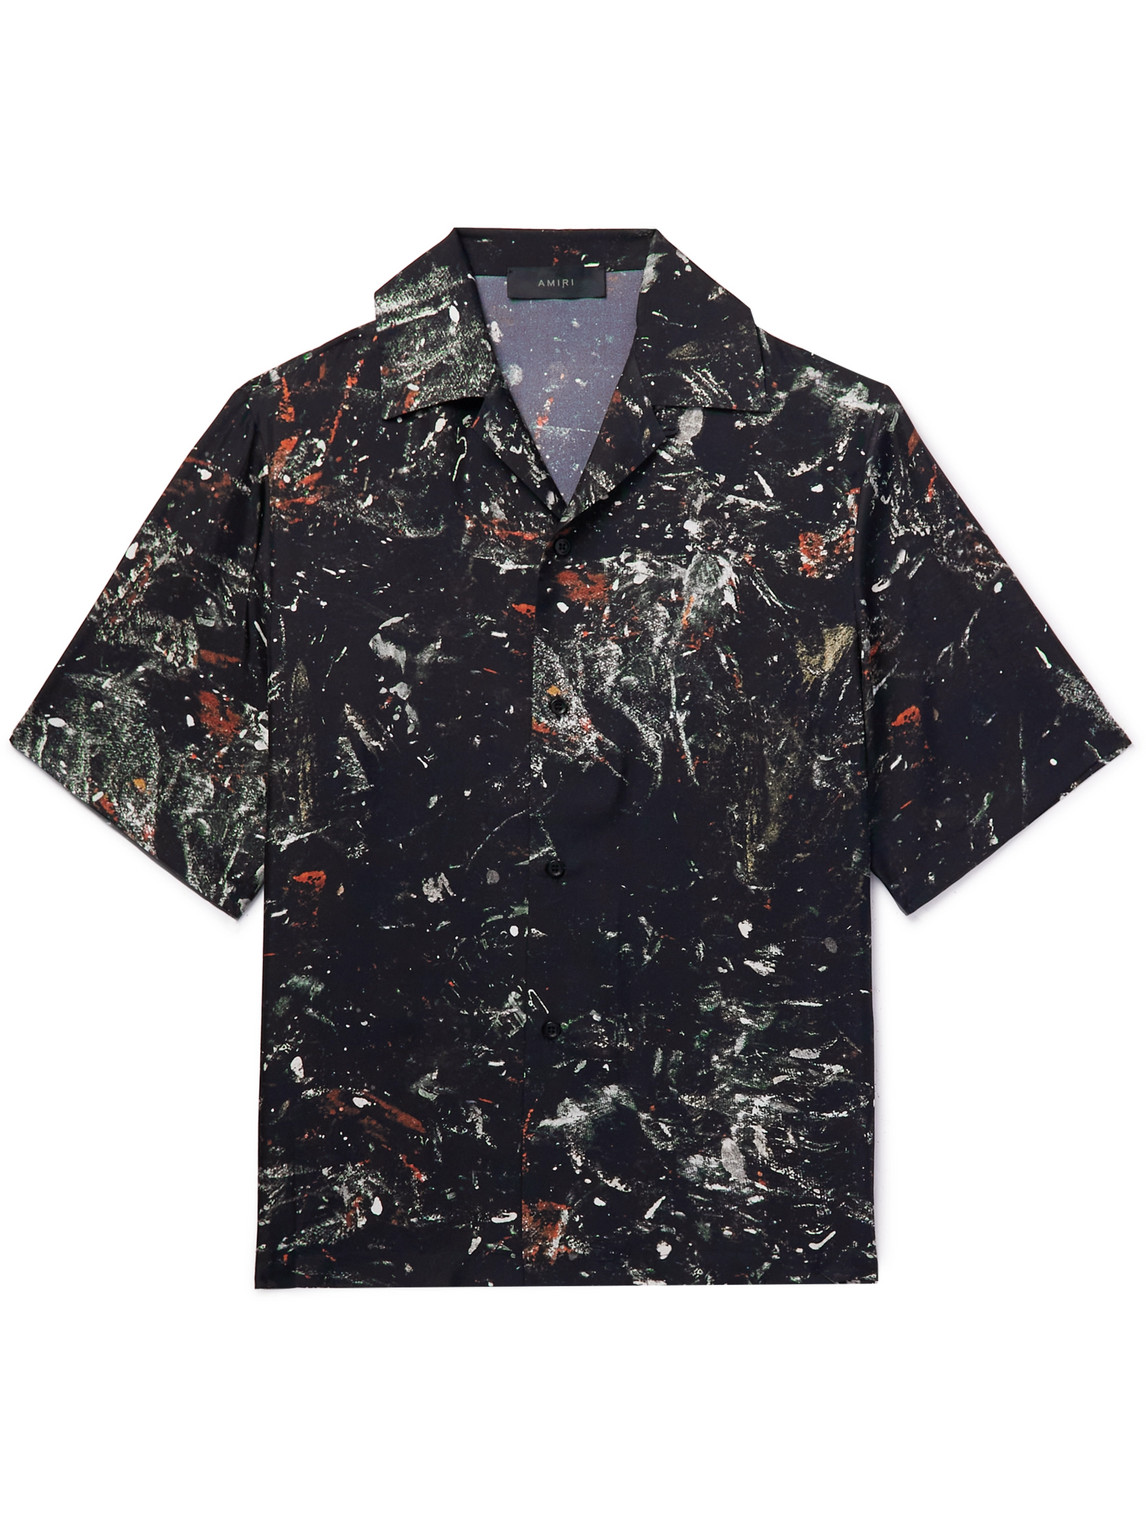 AMIRI - Wes Lang Convertible-Collar Paint-Splattered Silk-Twill Shirt - Men - Black - S